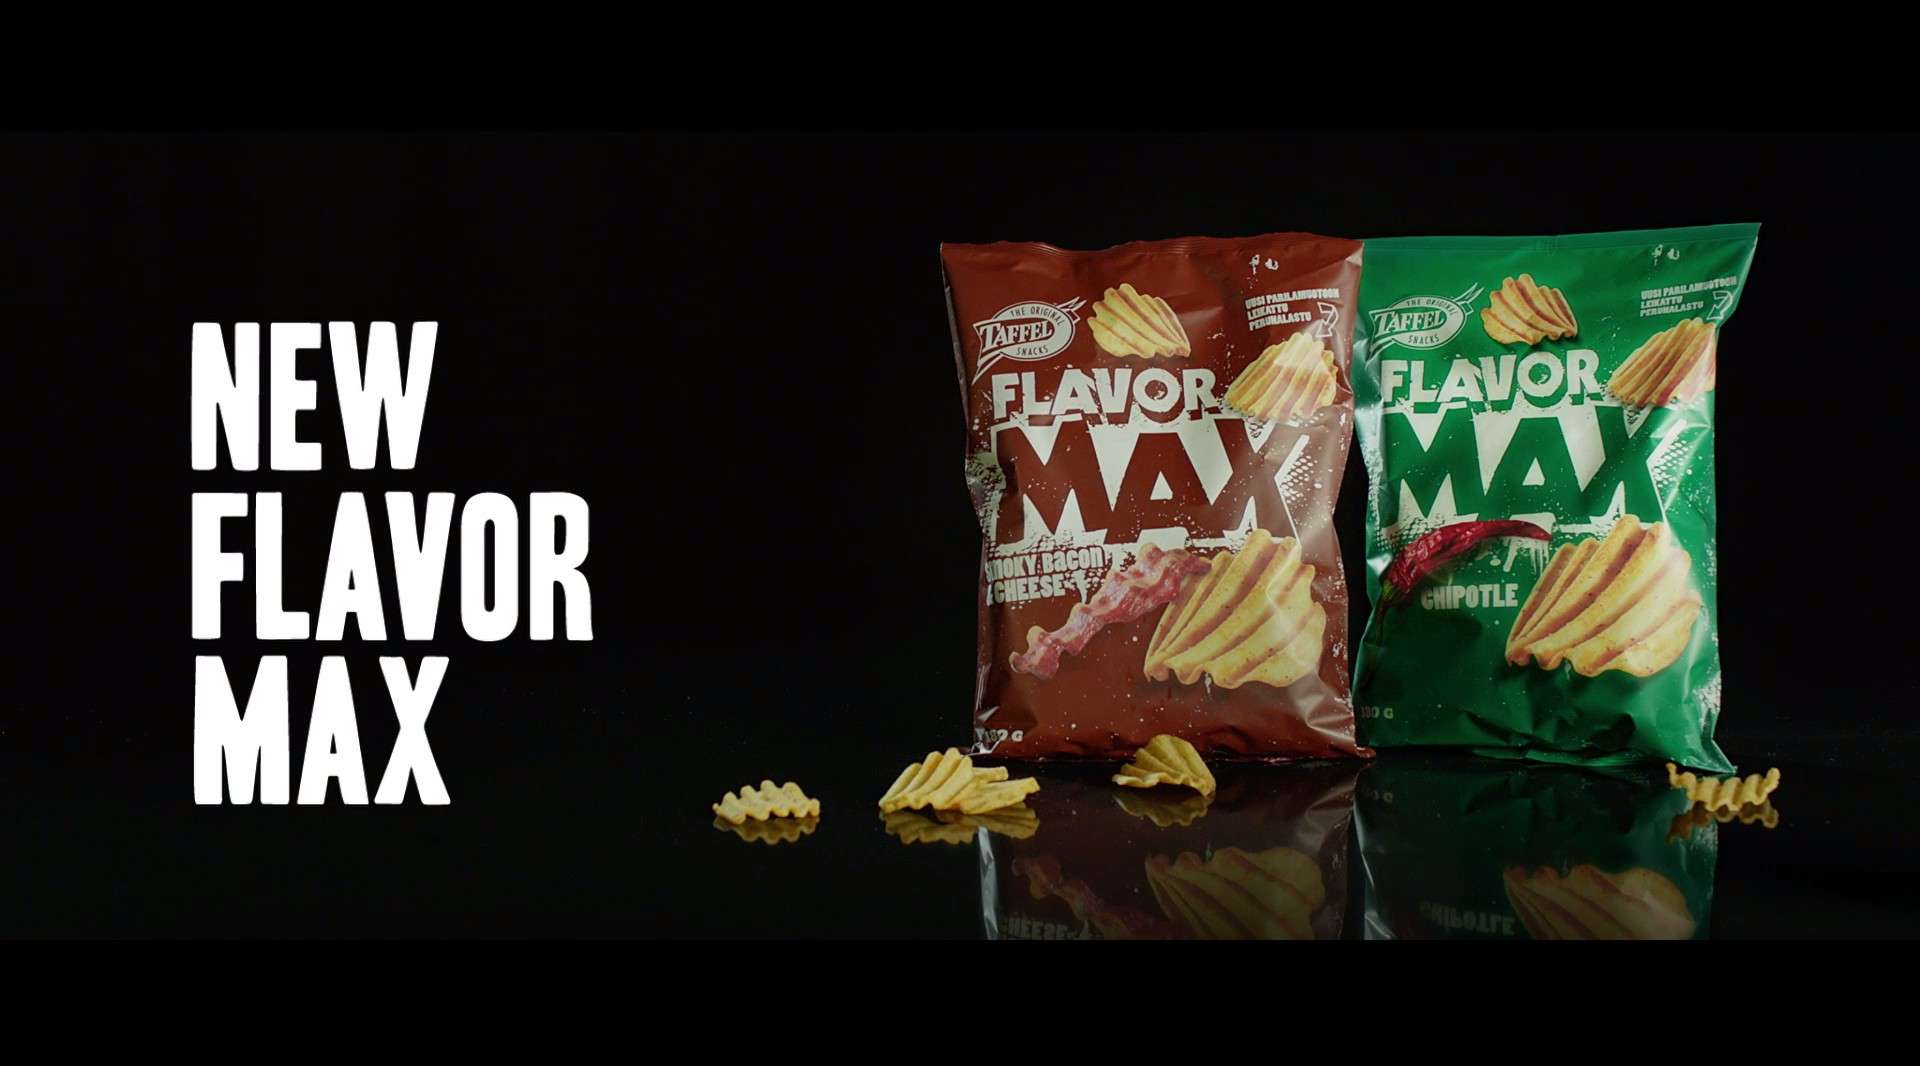 Taffel Flavor Max 薯片创意广告片